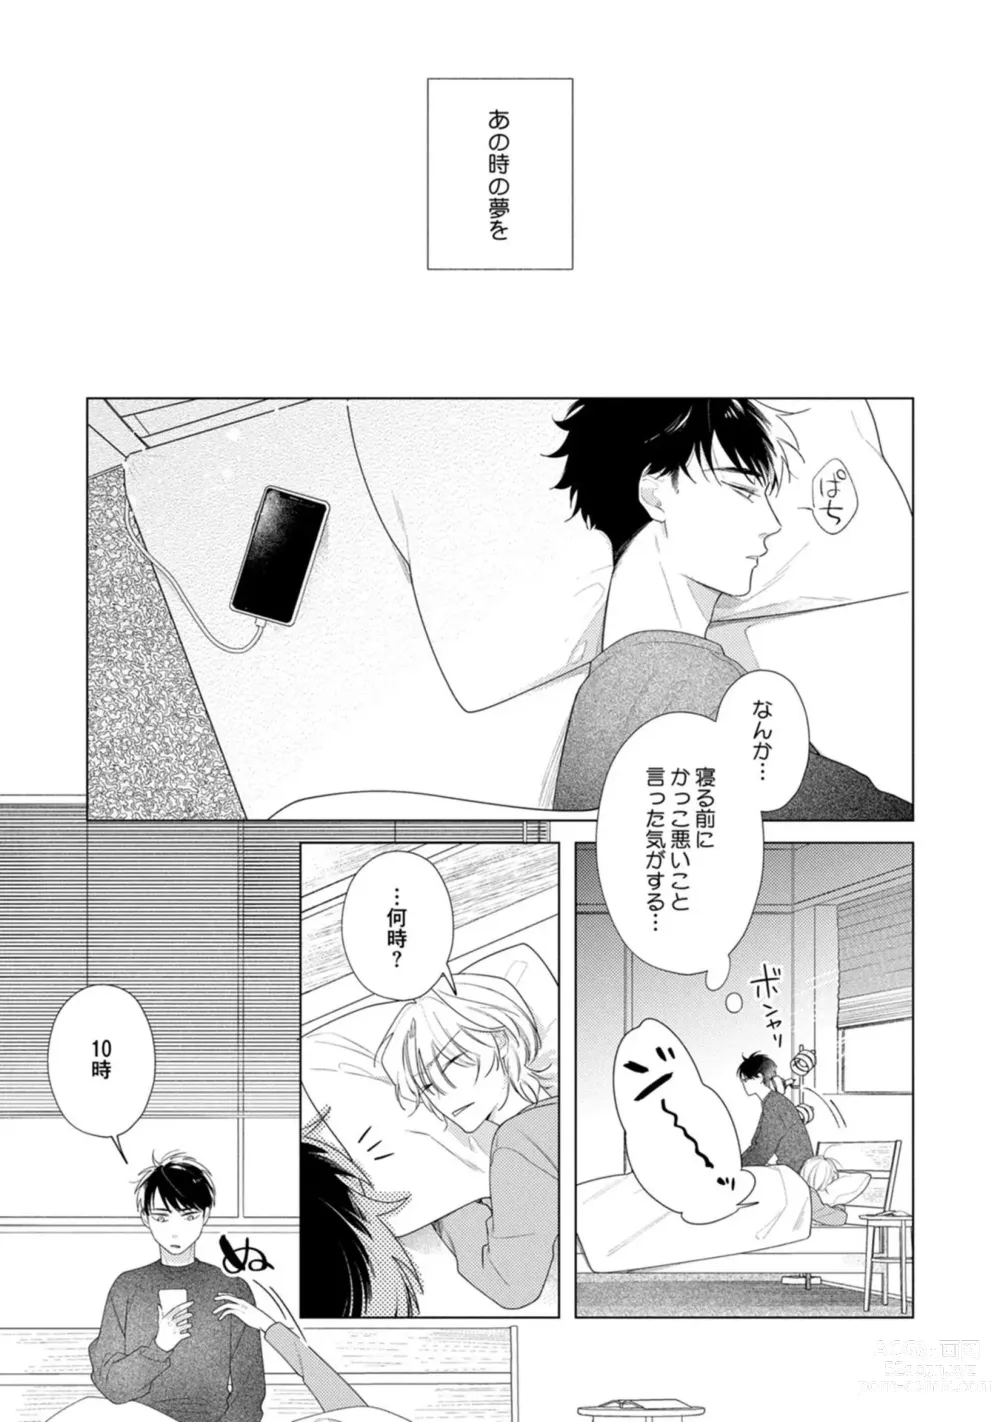 Page 15 of manga Yoru mo, Asa mo